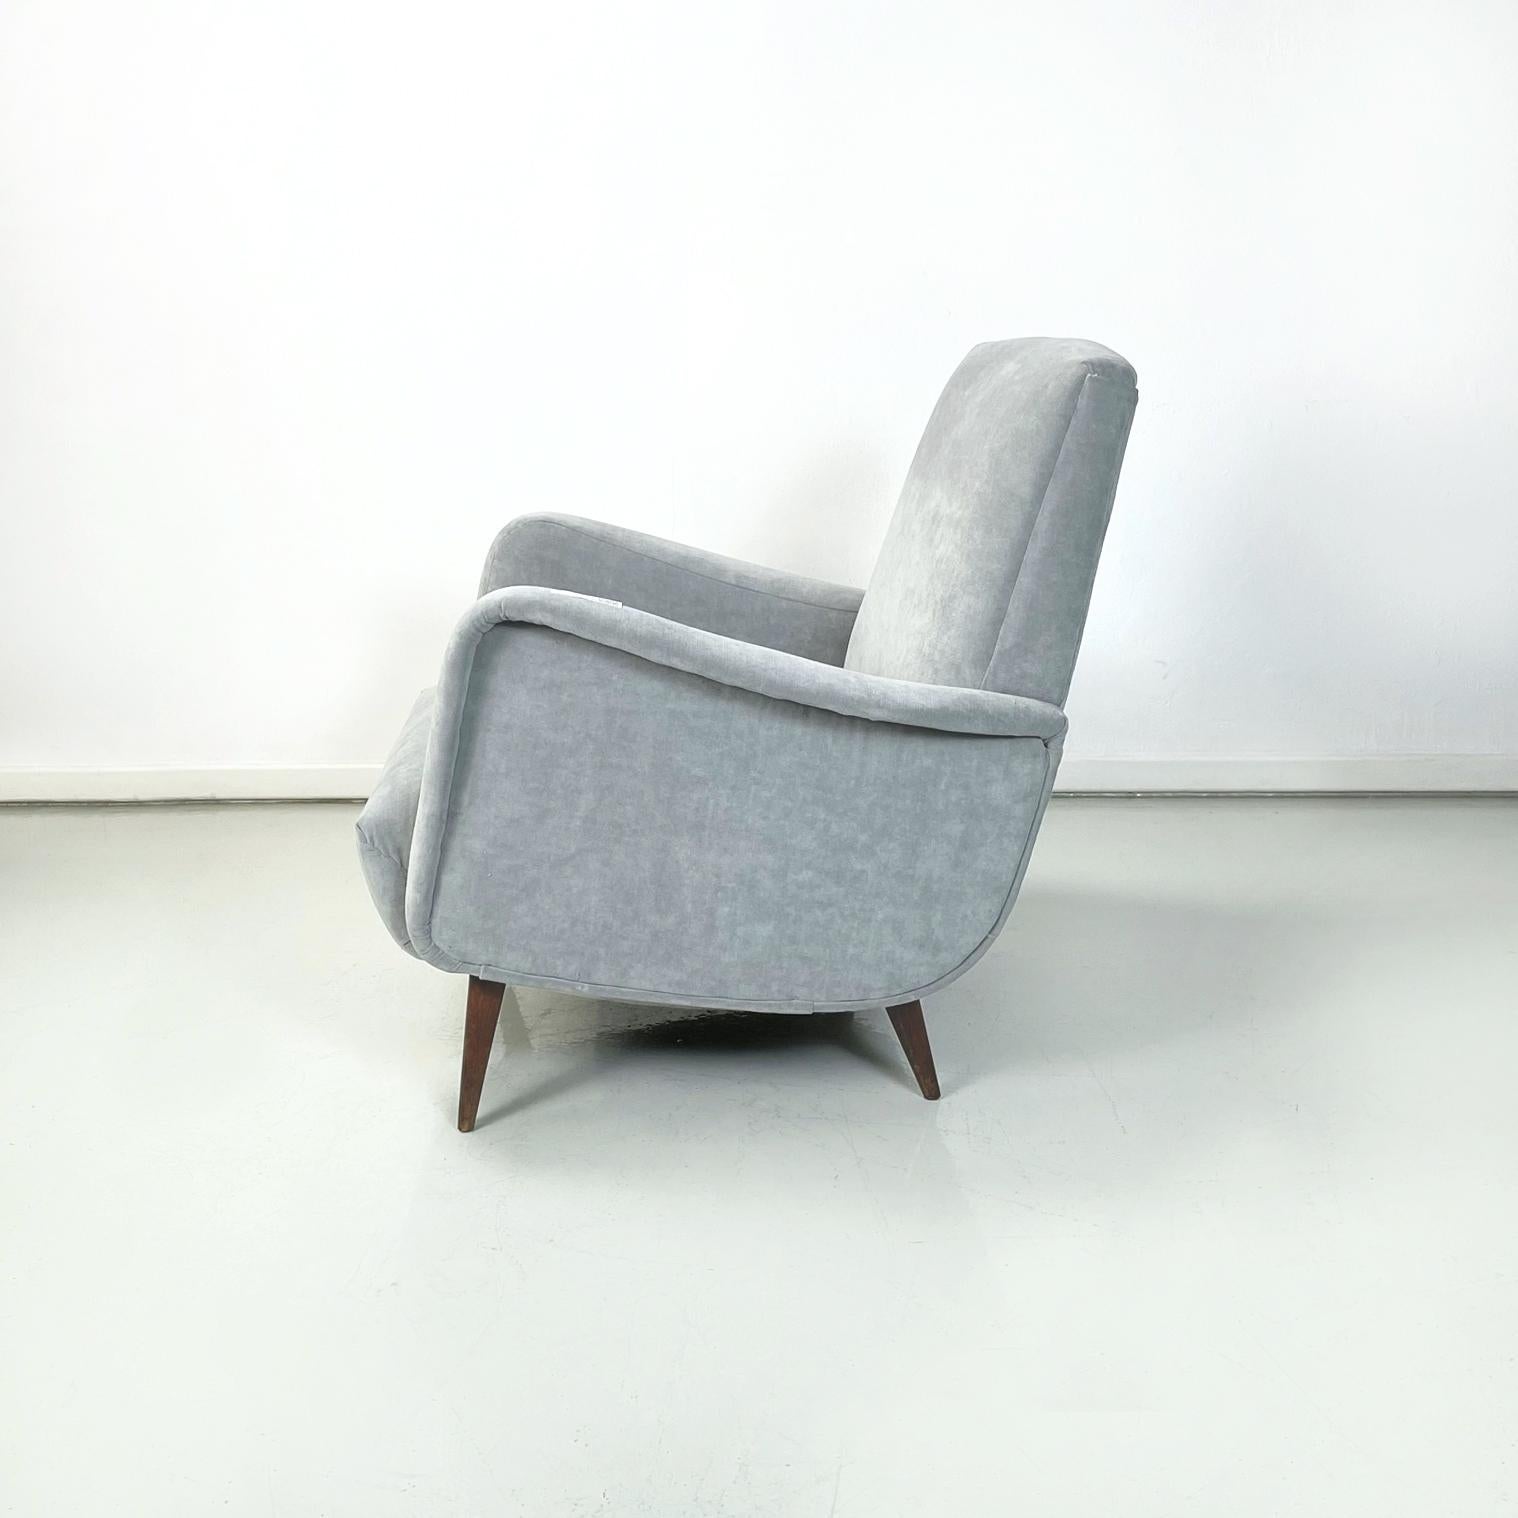 Mid-20th Century Italian Mid-Century Modern Armchairs in Light Gray Velvet and Wood, 1960s For Sale